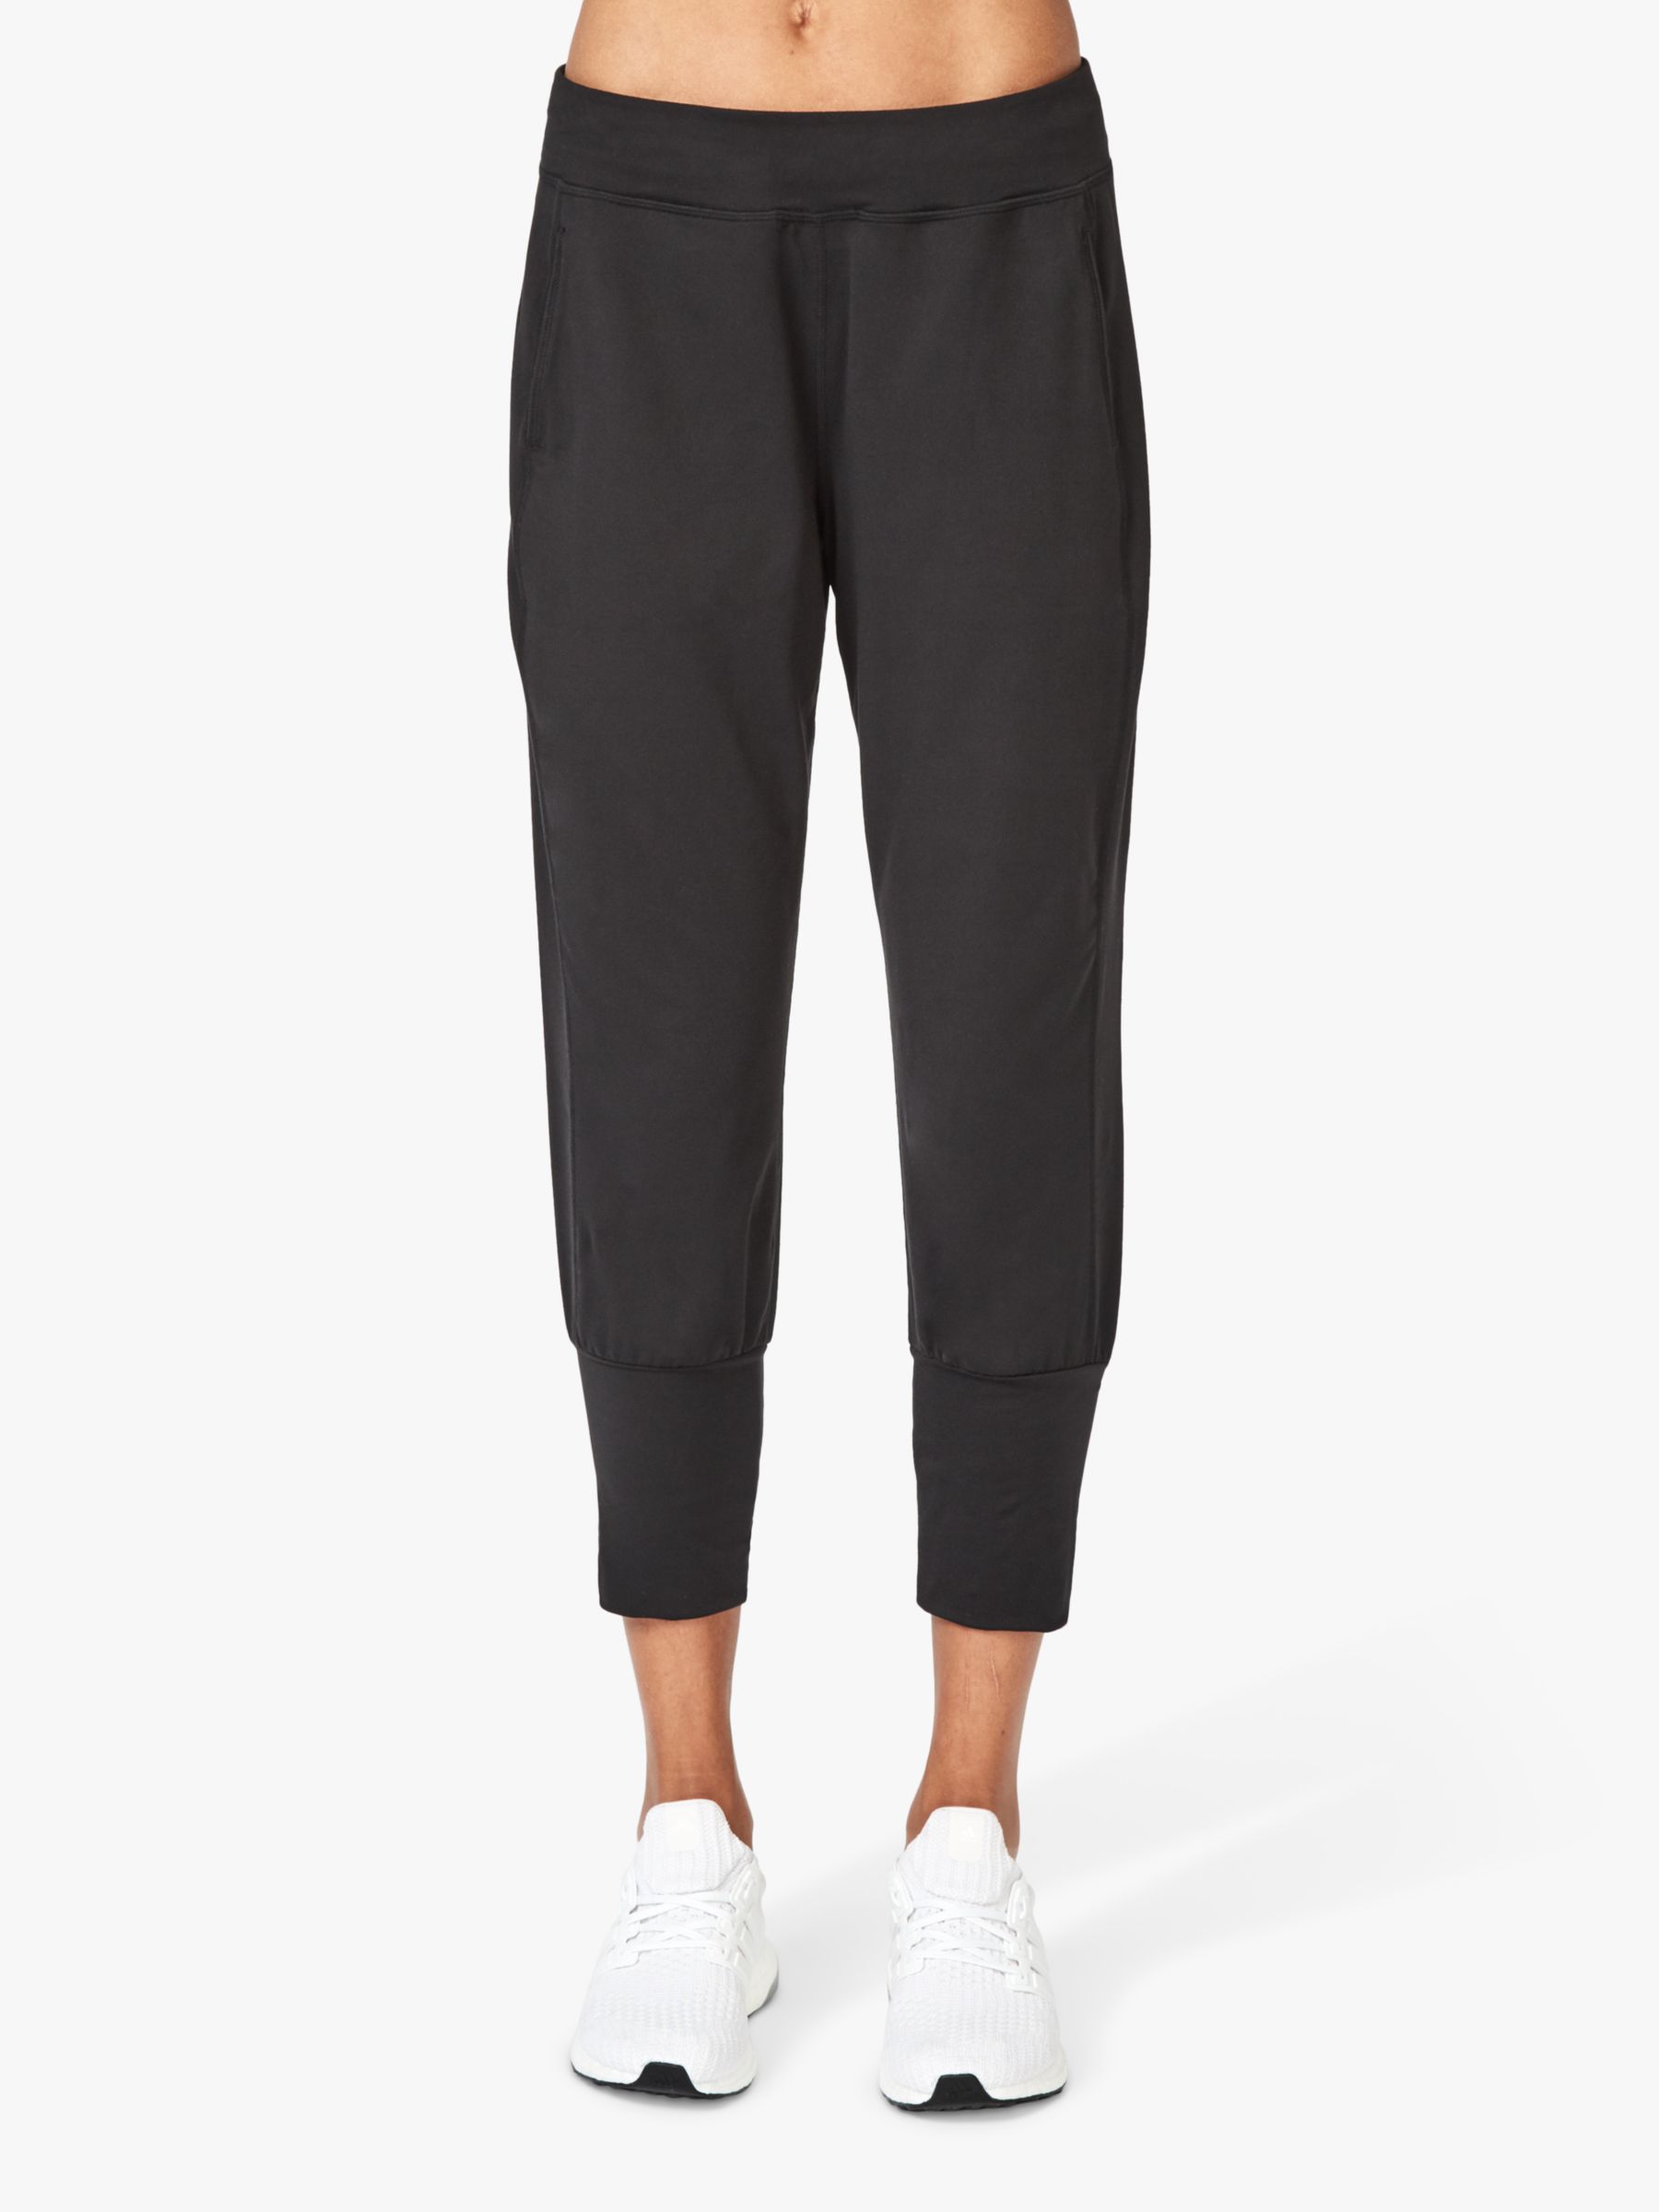 Gary Yoga Pants - Black, Women's Trousers & Yoga Pants